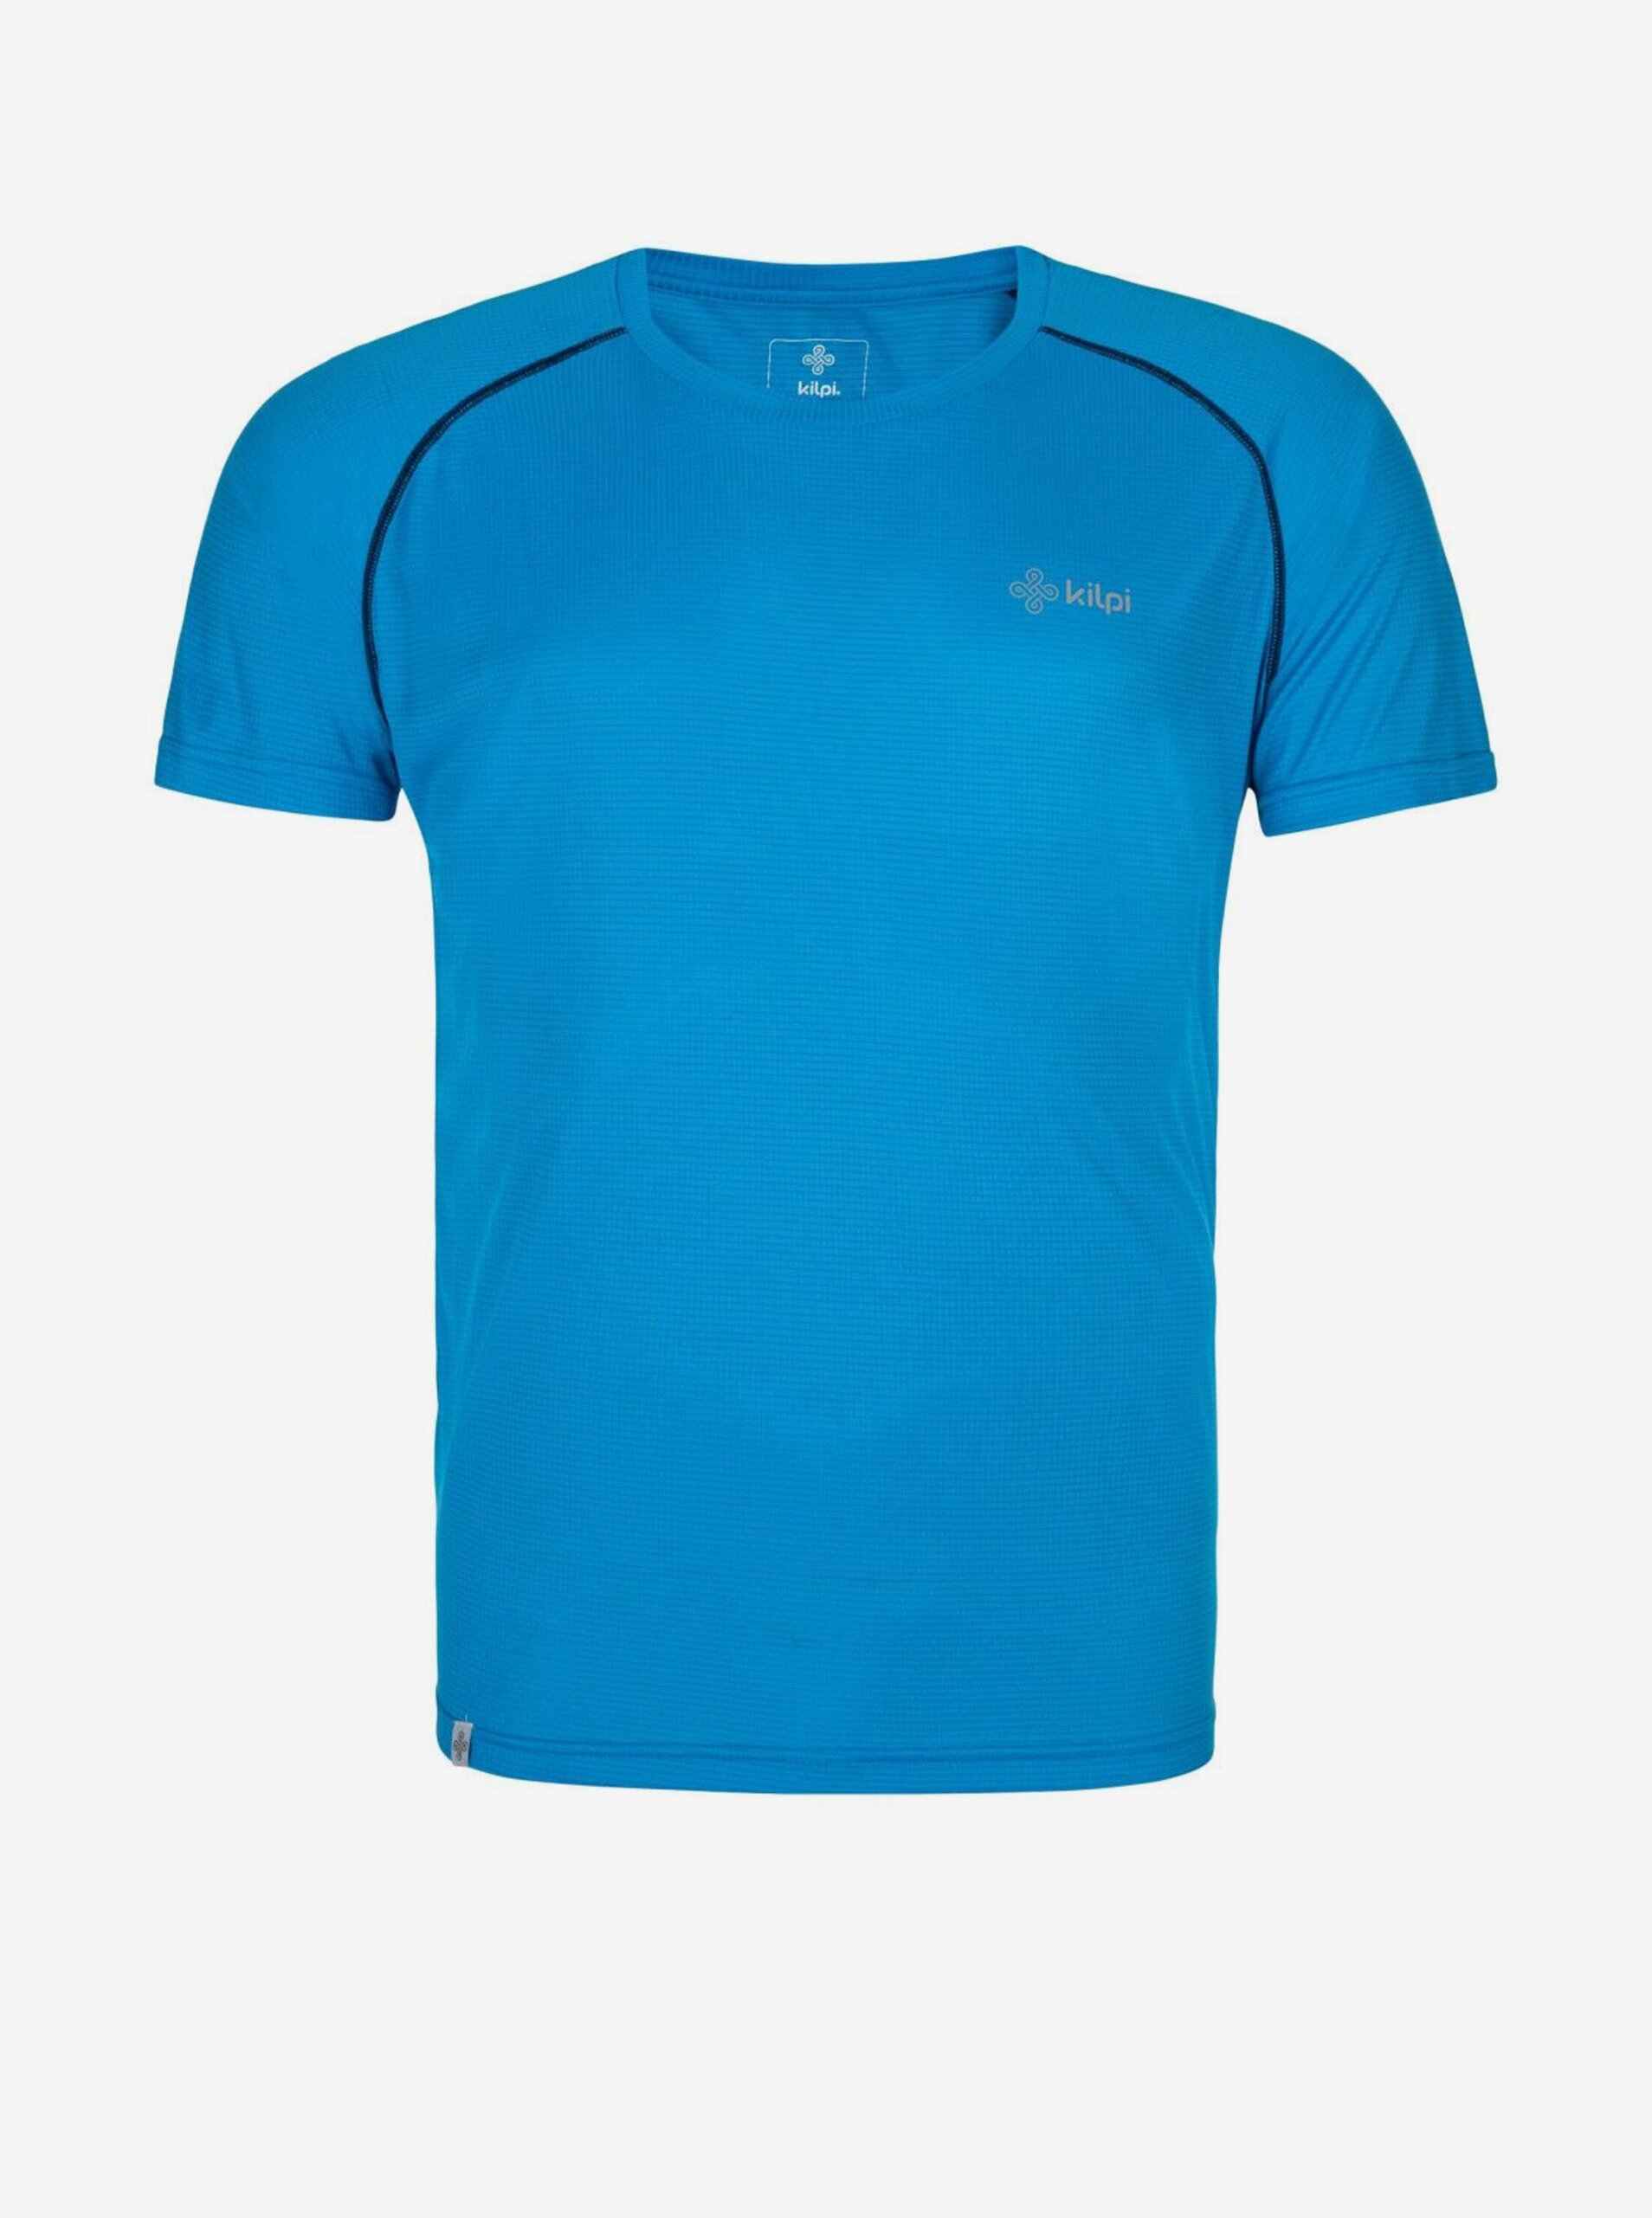 Lacno Modré pánske športové tričko Kilpi DIMARO